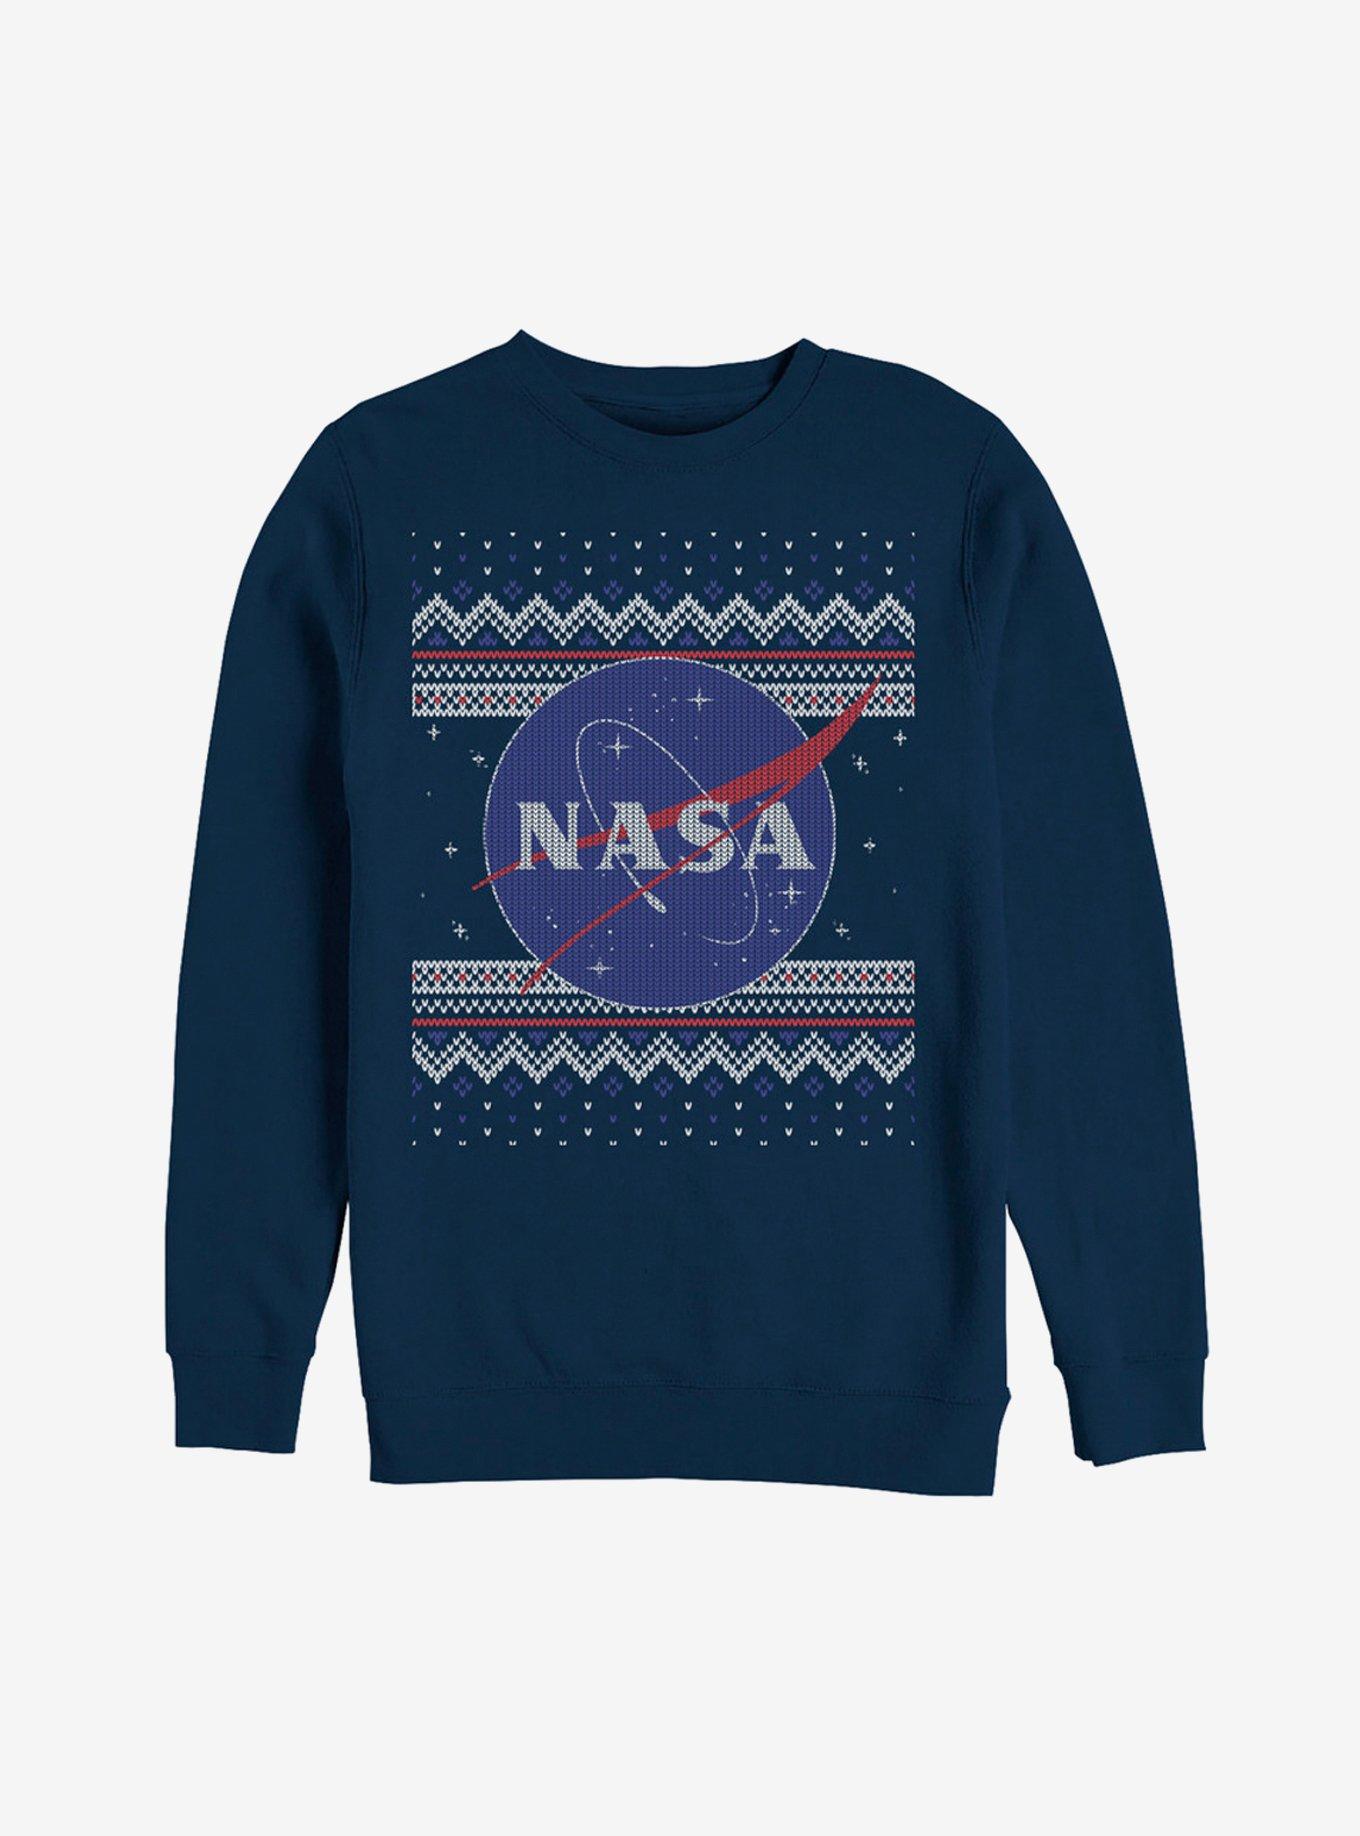 NASA Logo Ugly Christmas Sweater Print Sweatshirt, NAVY, hi-res